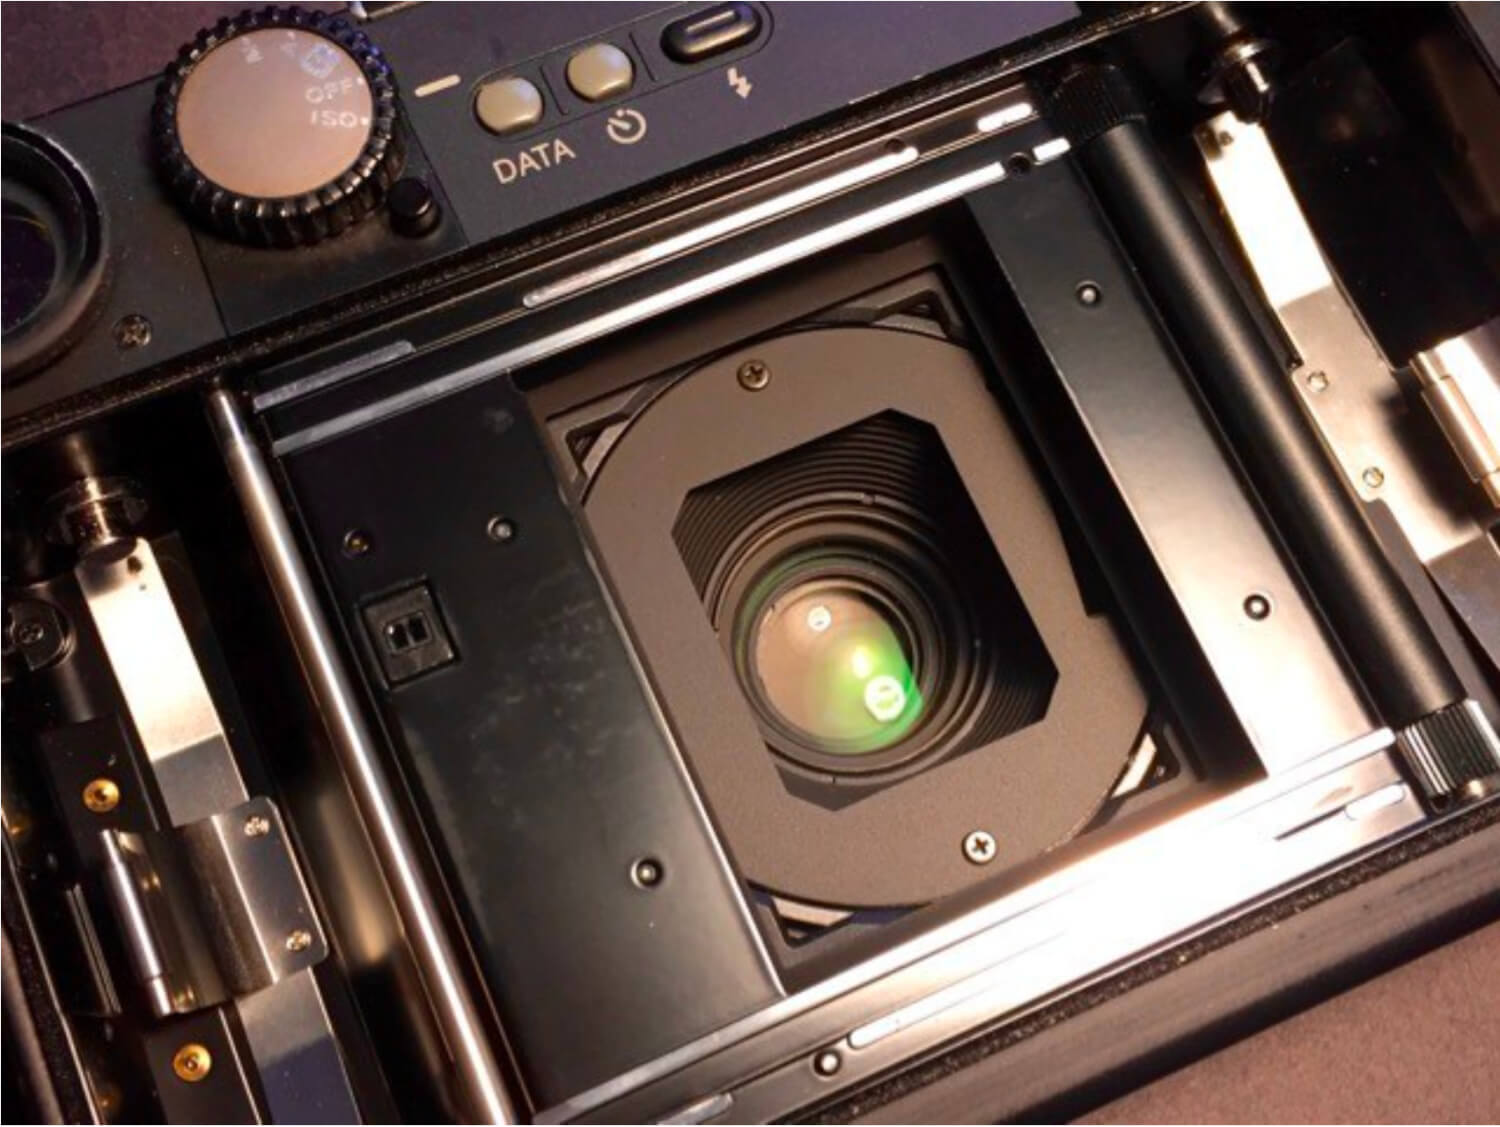 The Fuji GA645 Professional - Film door open, lens on show